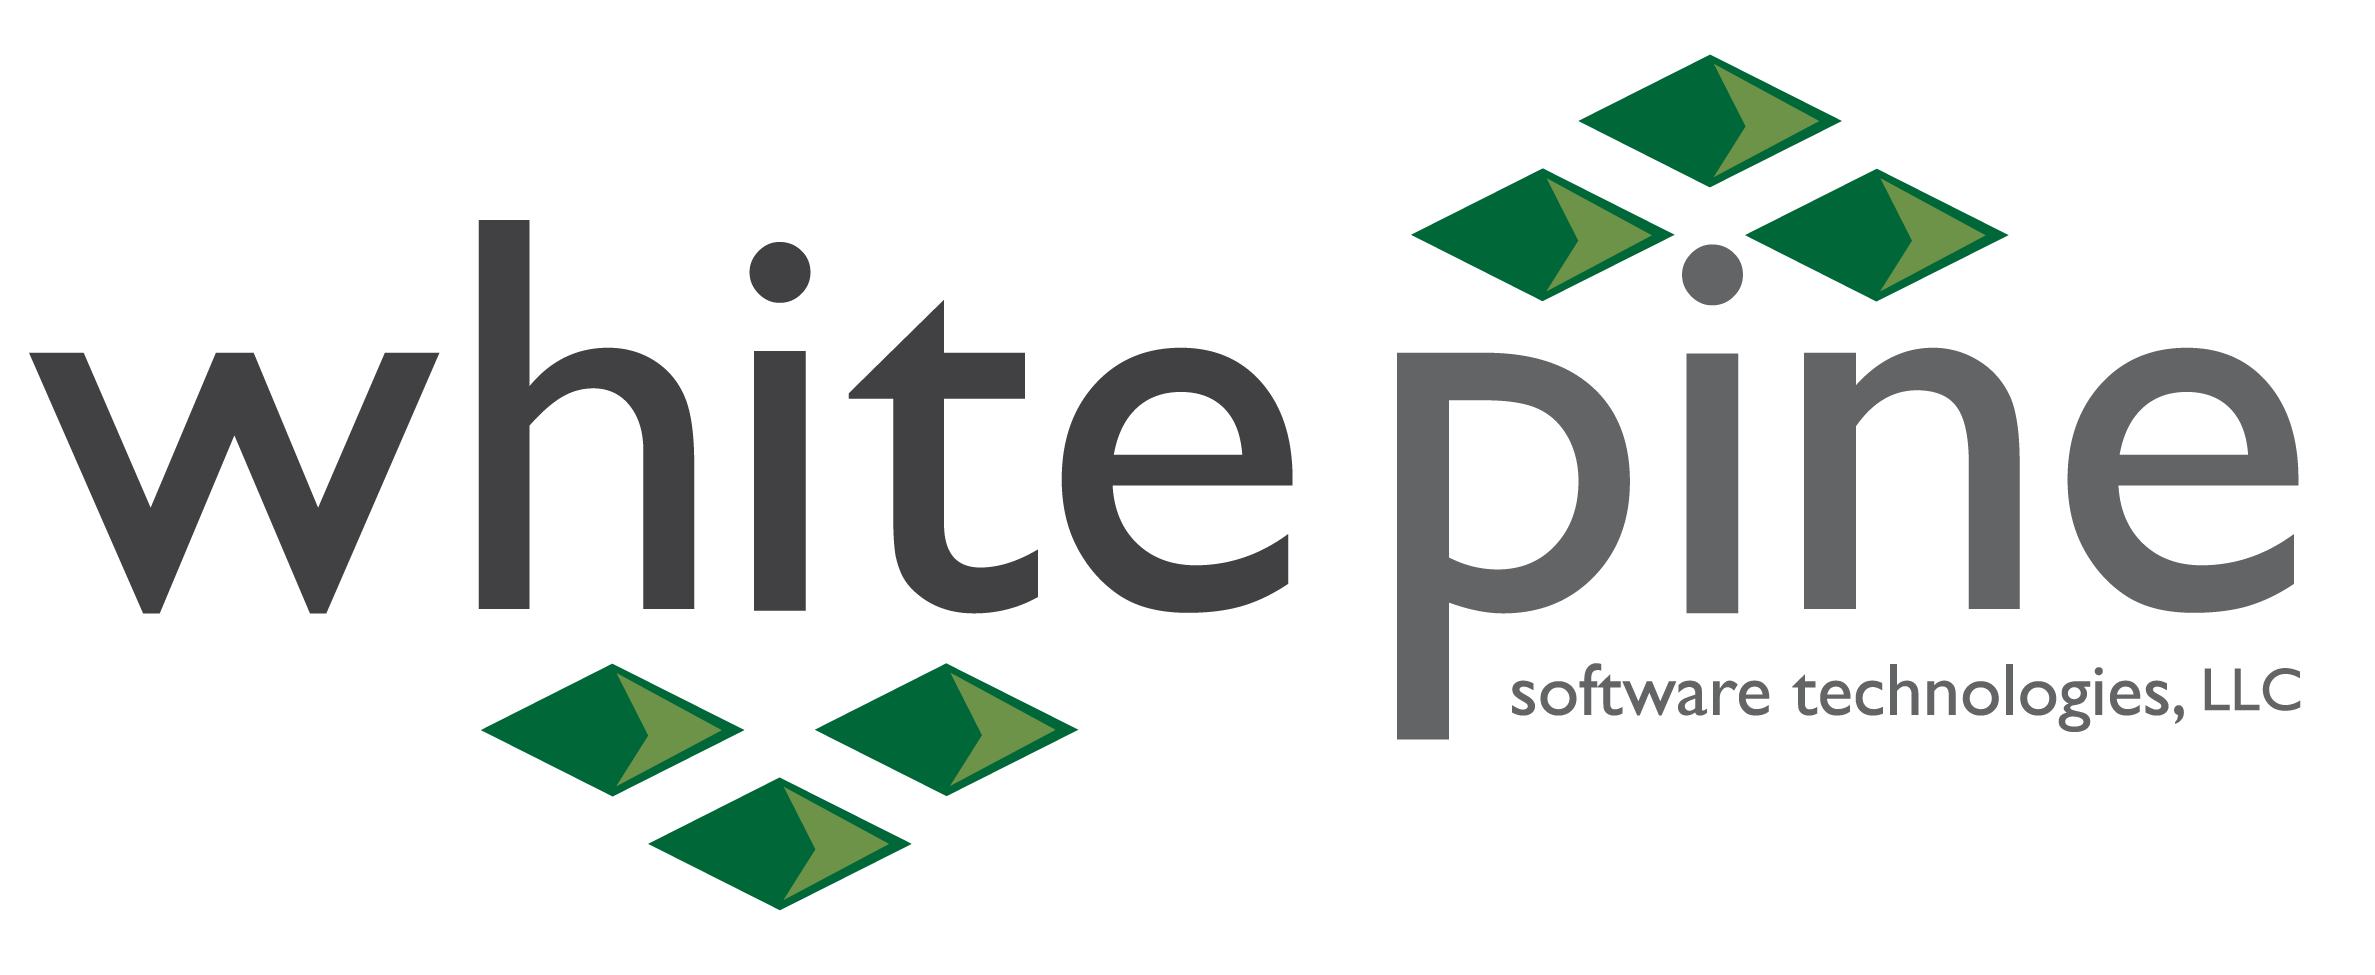 White Pine Logo - White Pine Software Technologies